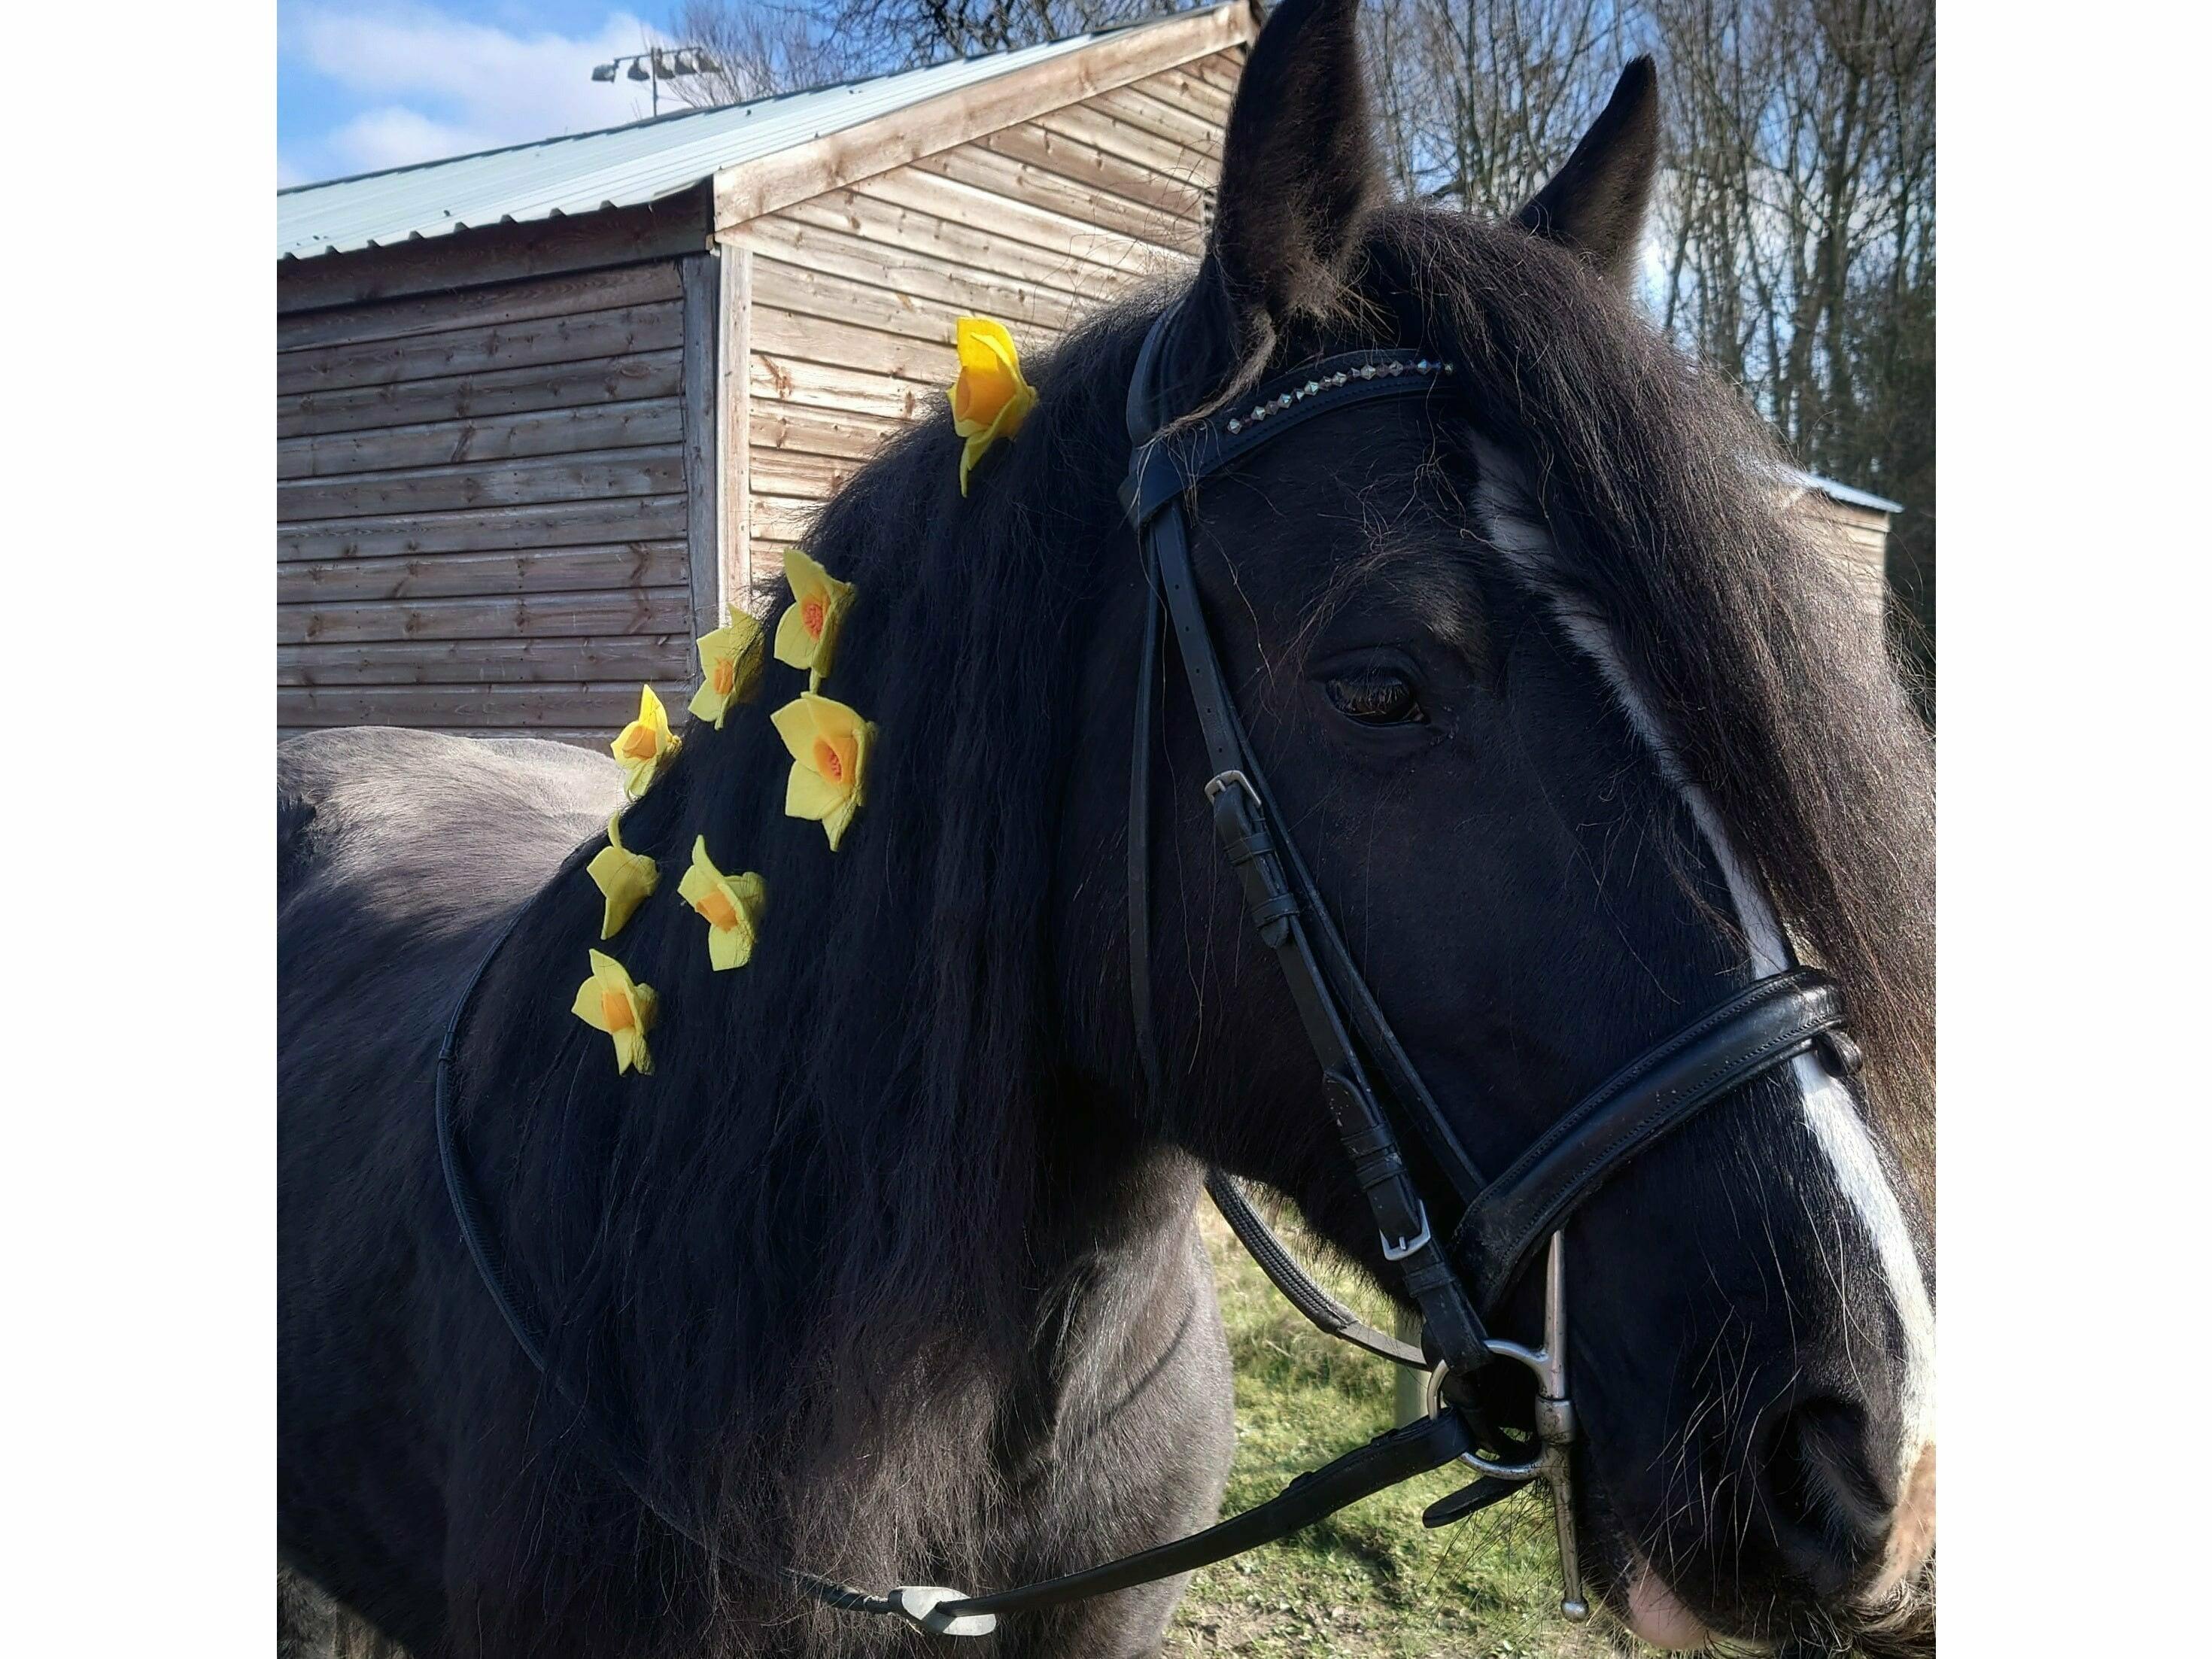 Daisy-Chain Equestrian Charm Daffodil Mane and Tail charm set (8 flowers)